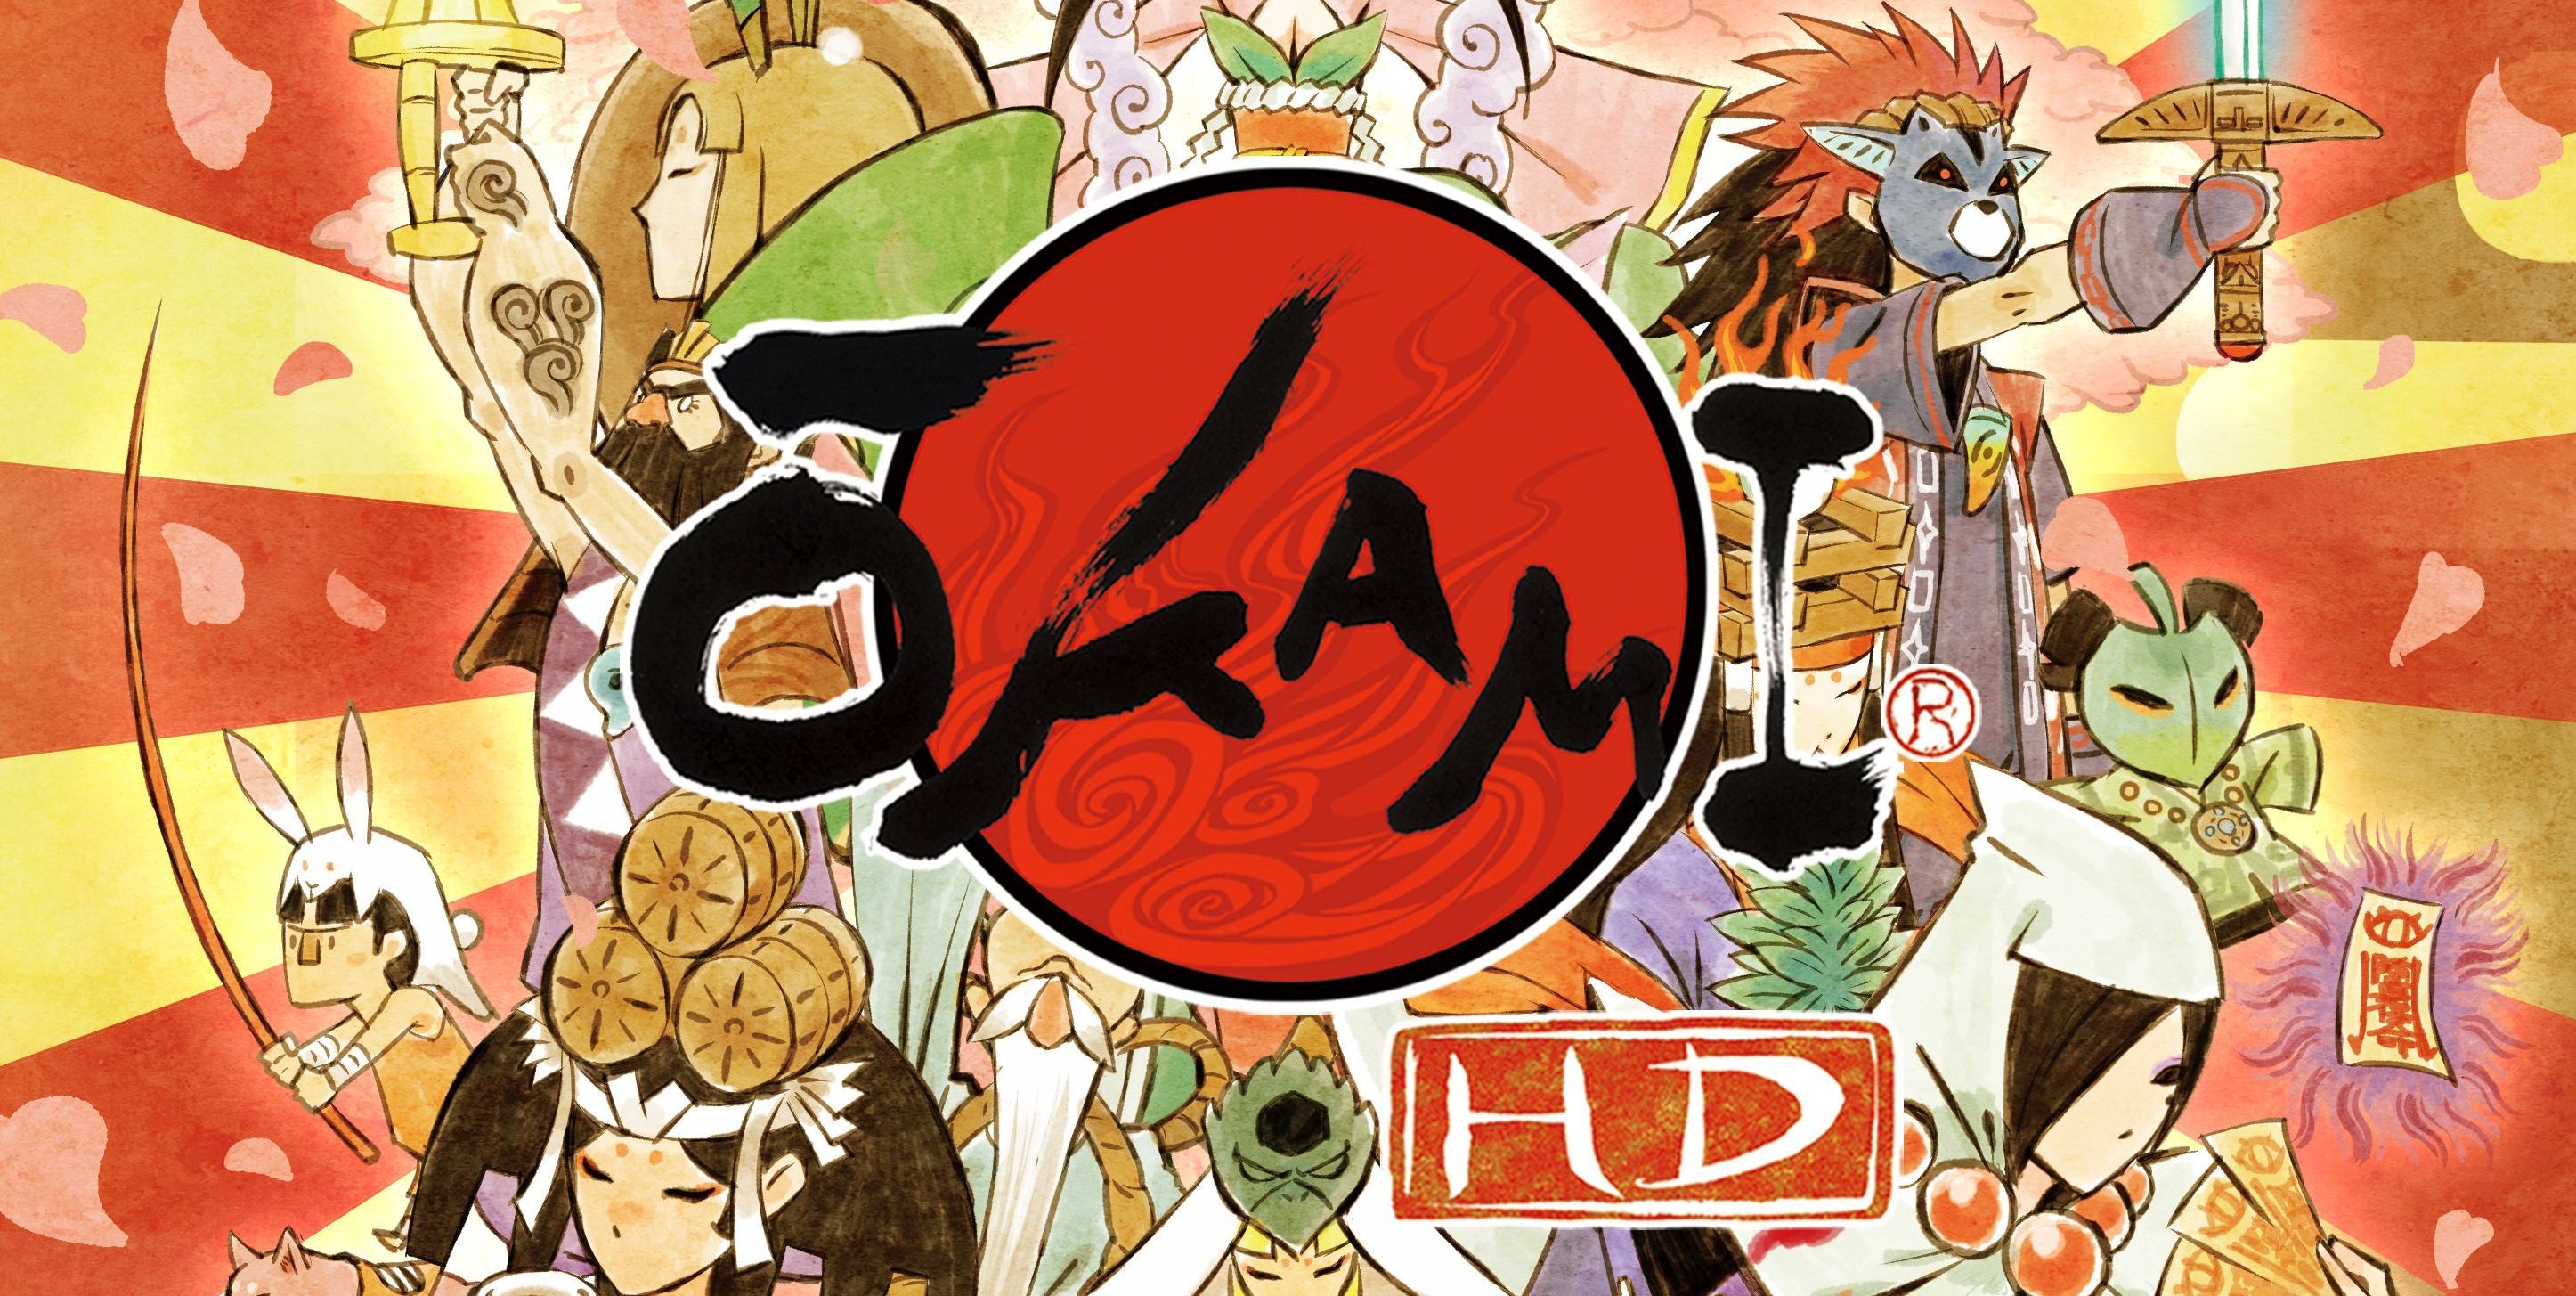 Okami HD & 4K Remaster